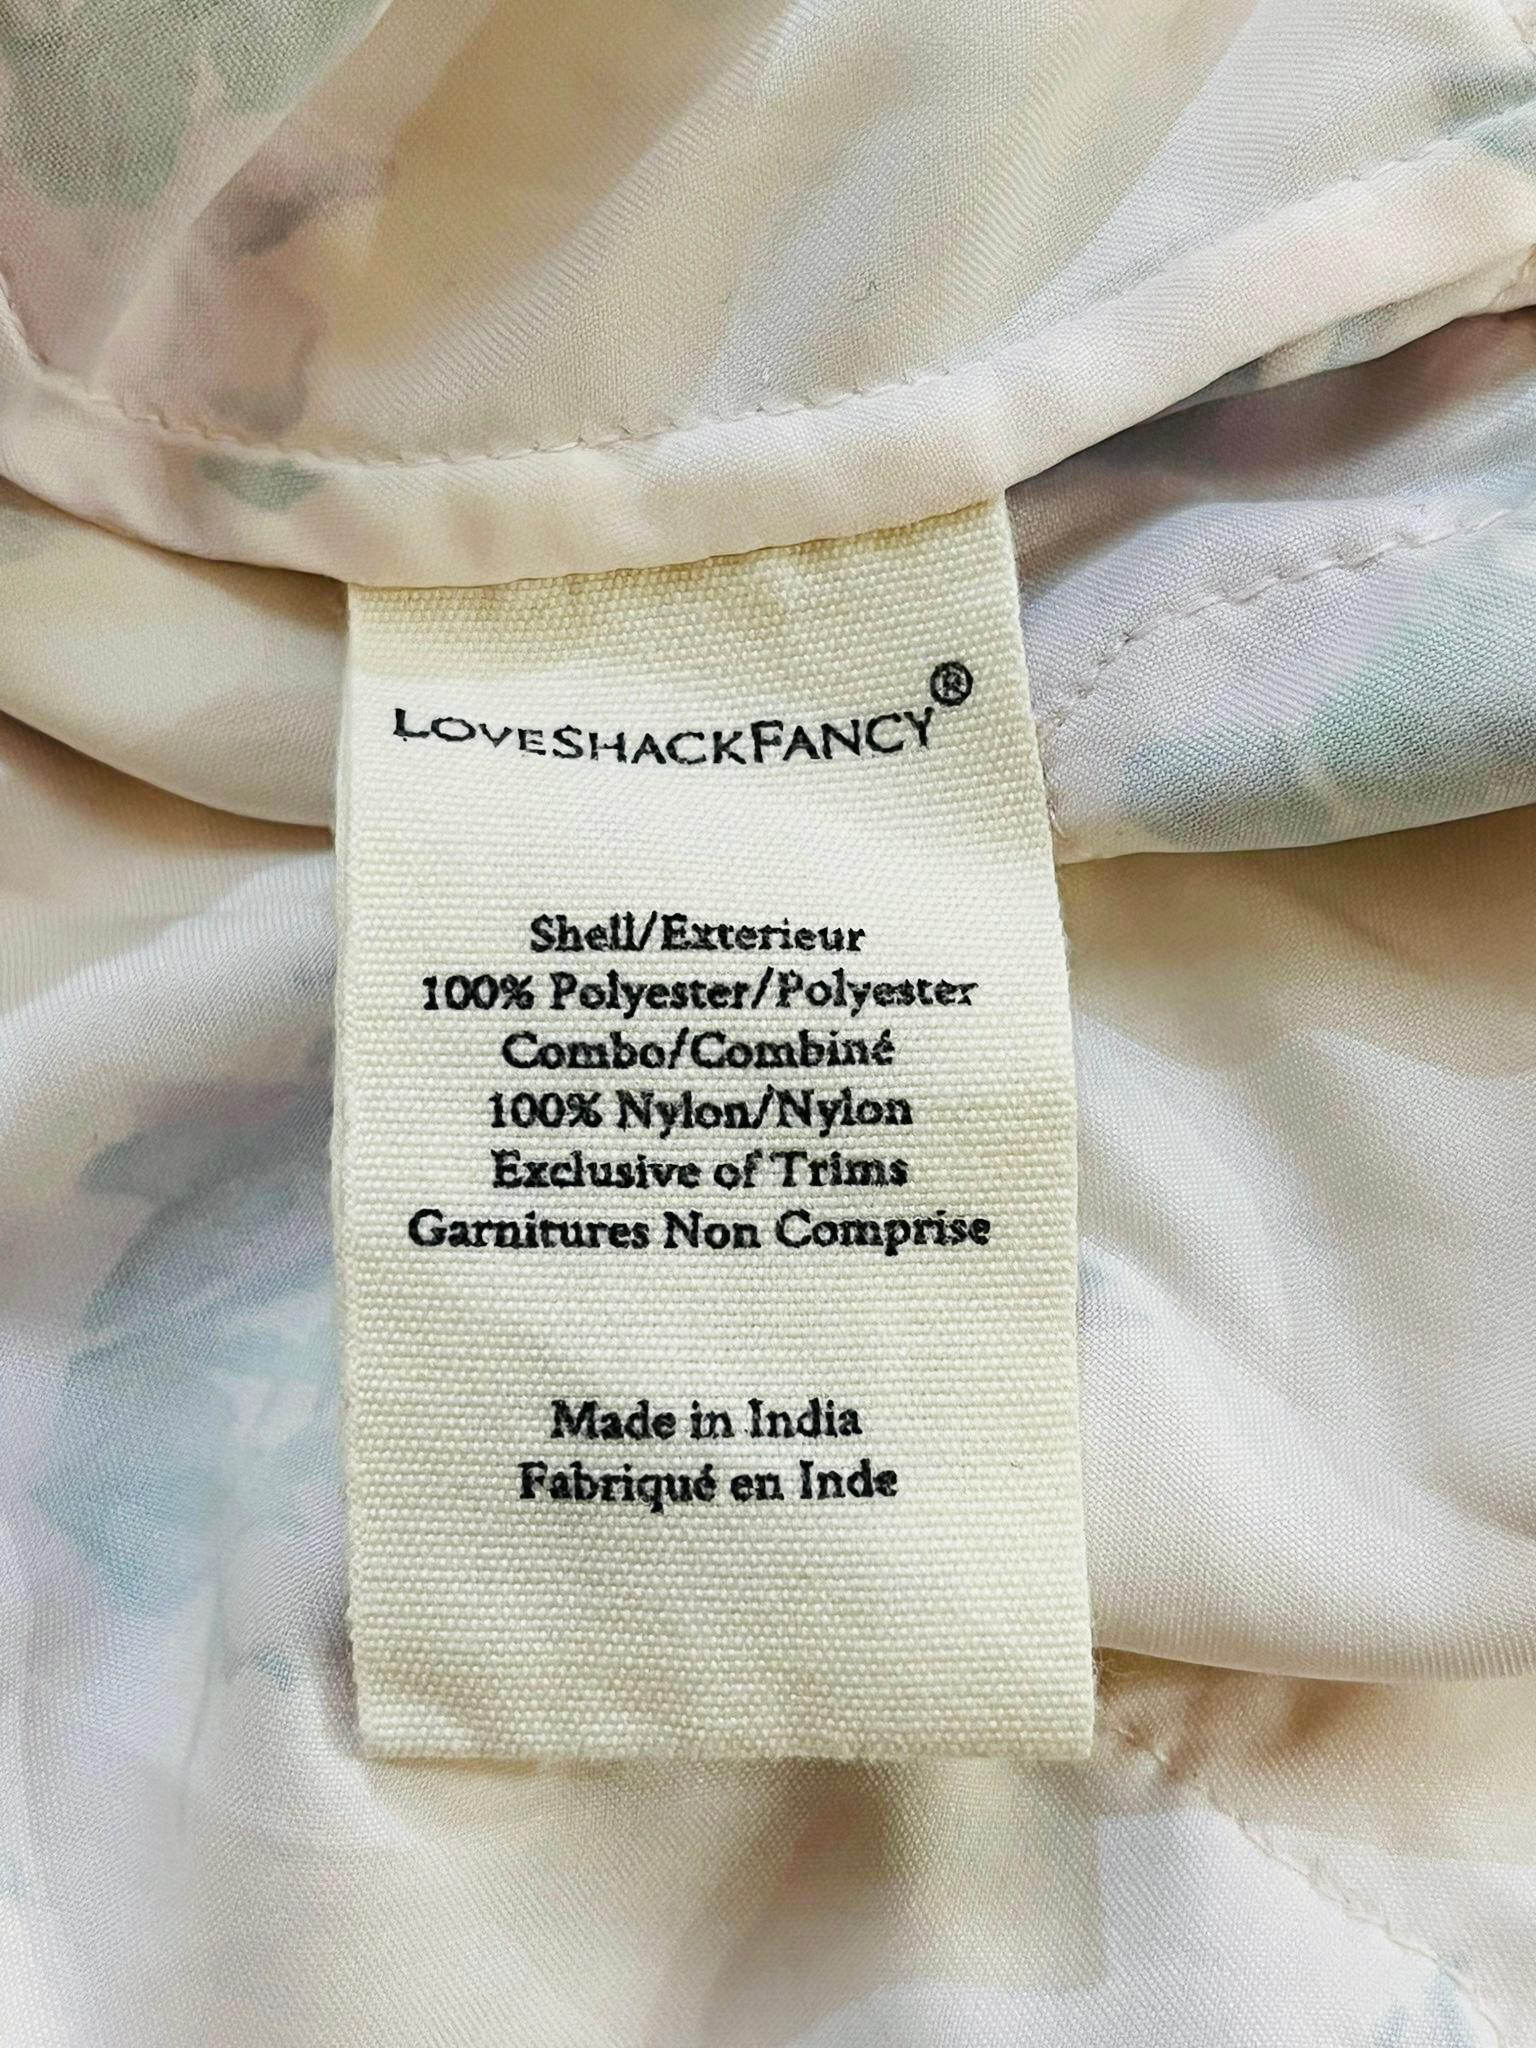 LoveShackFancy Lace Floral Crepe Dress For Sale 3